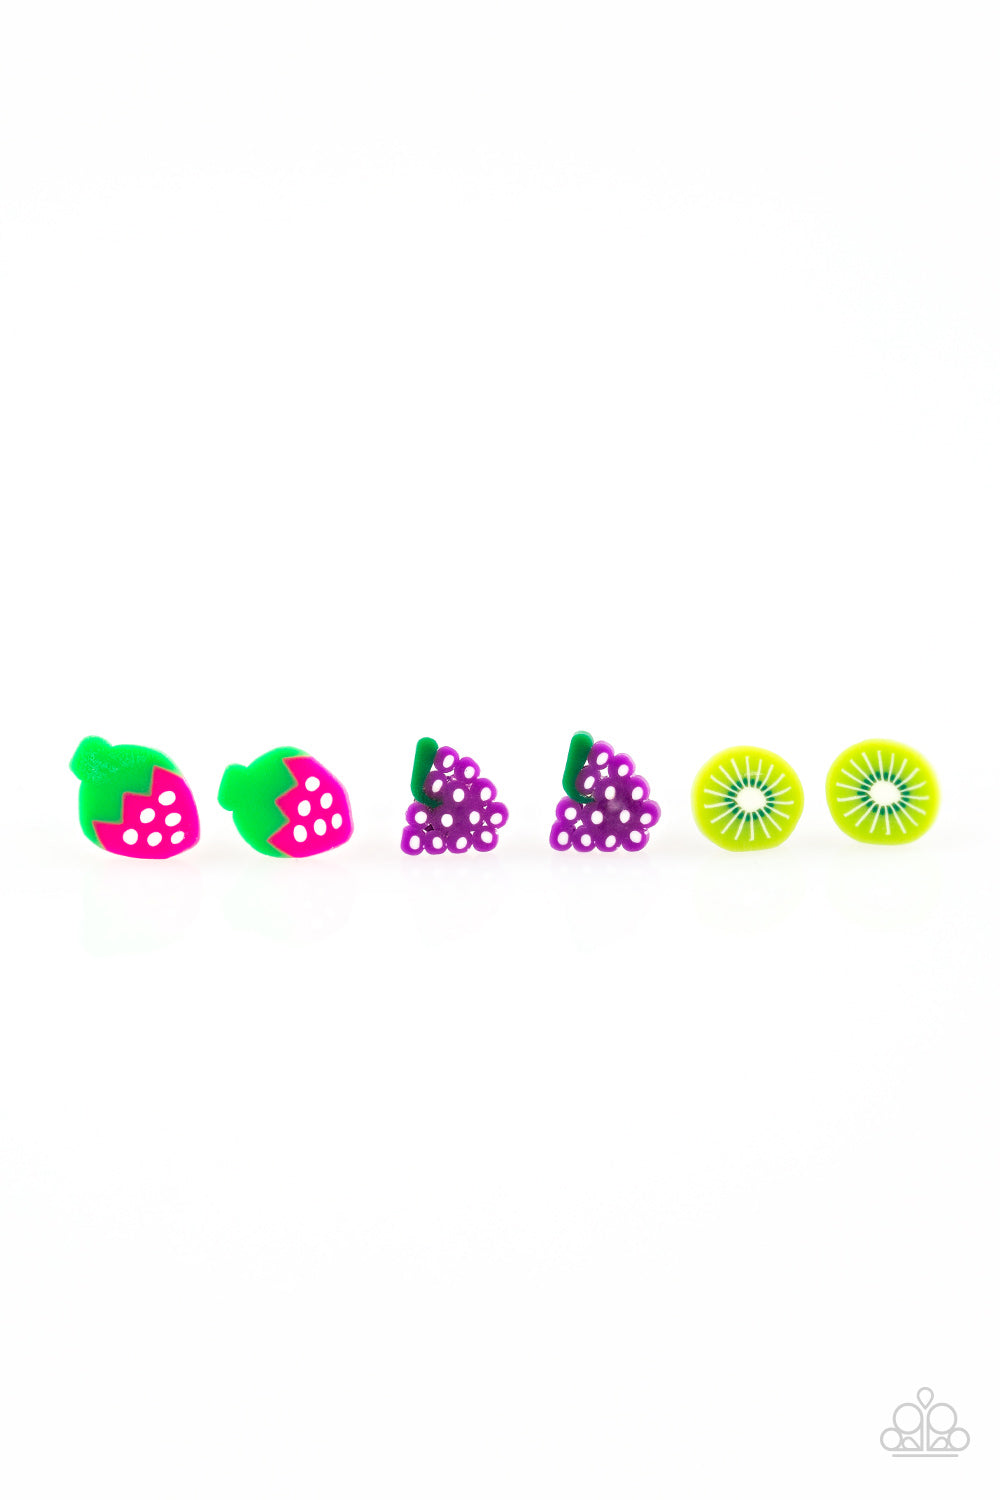 1 pack of 5 Lil Precious Fruit Inspired Earrings